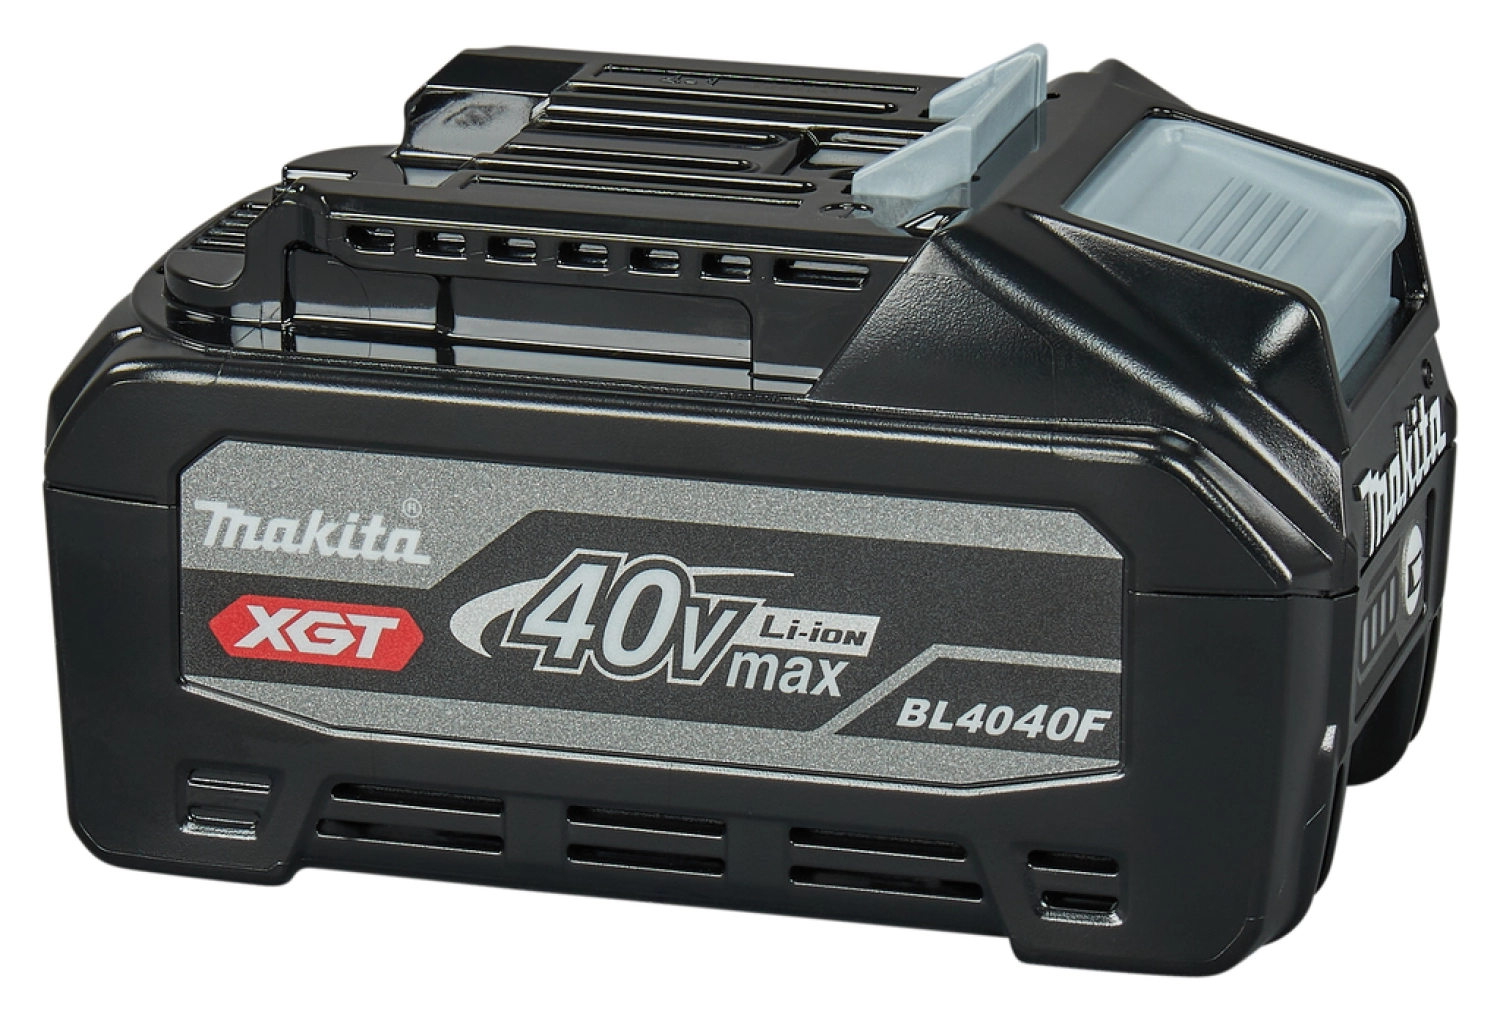 Makita BL4040F 40V XGT Max Li-Ion batterie- 4,0Ah-image